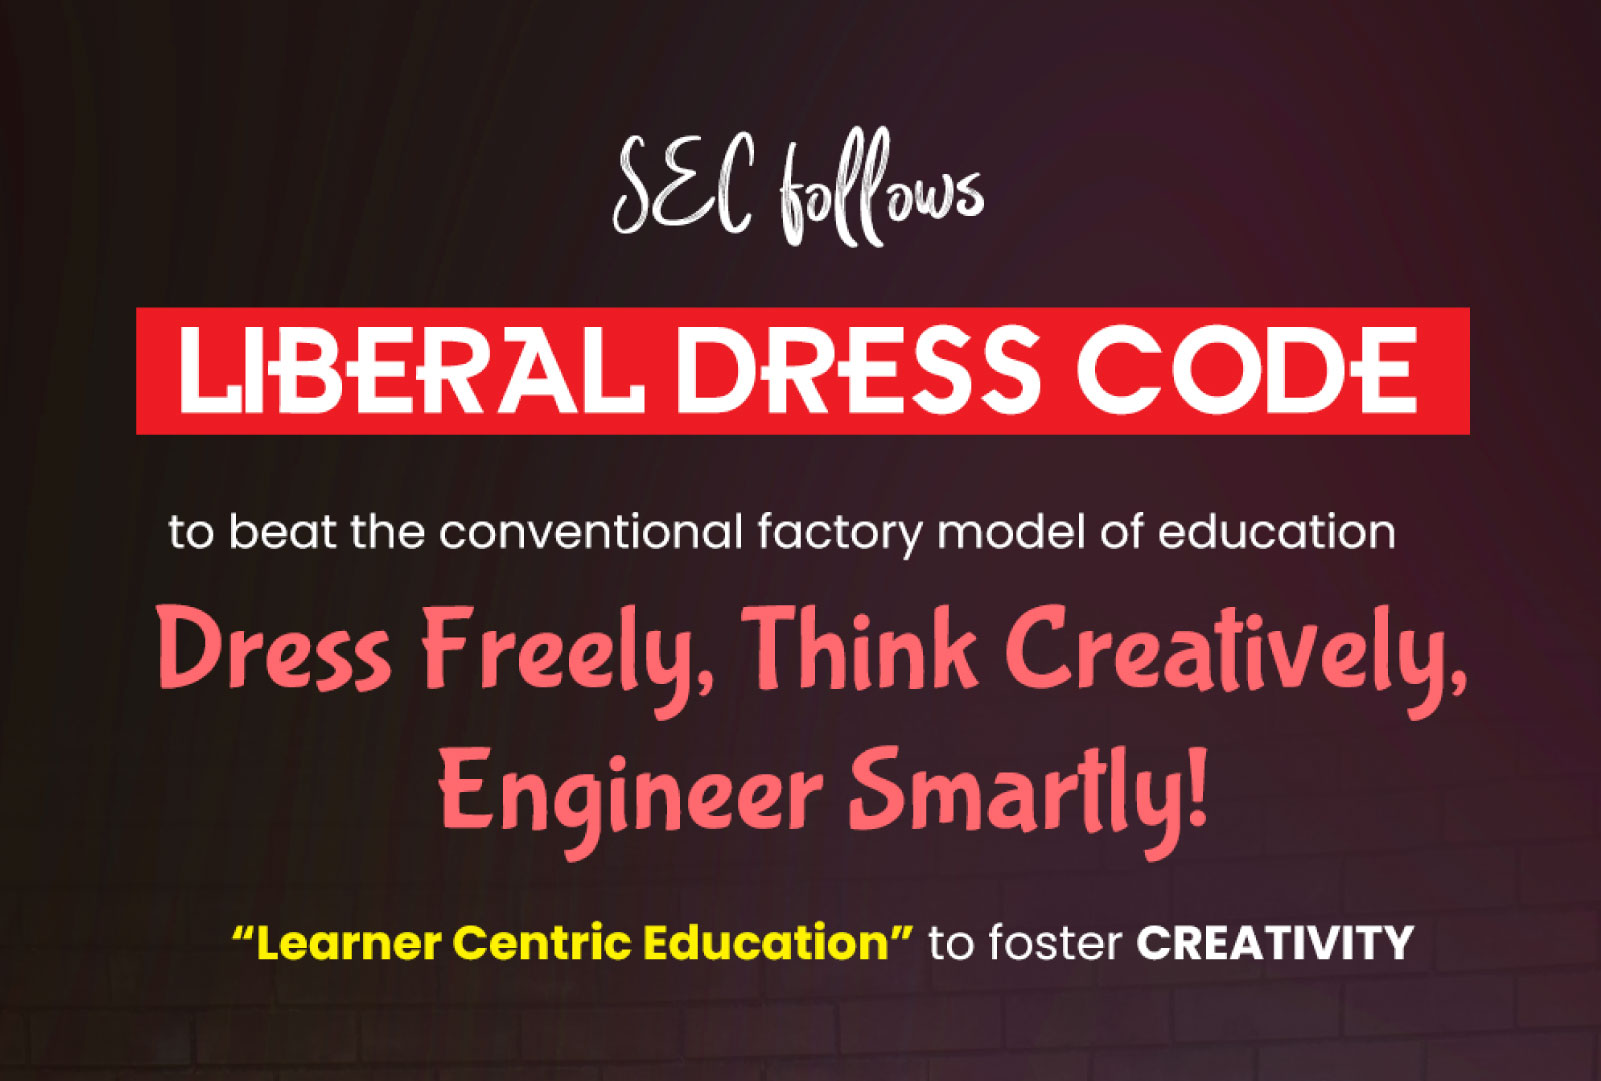 Liberal Dress Code 2